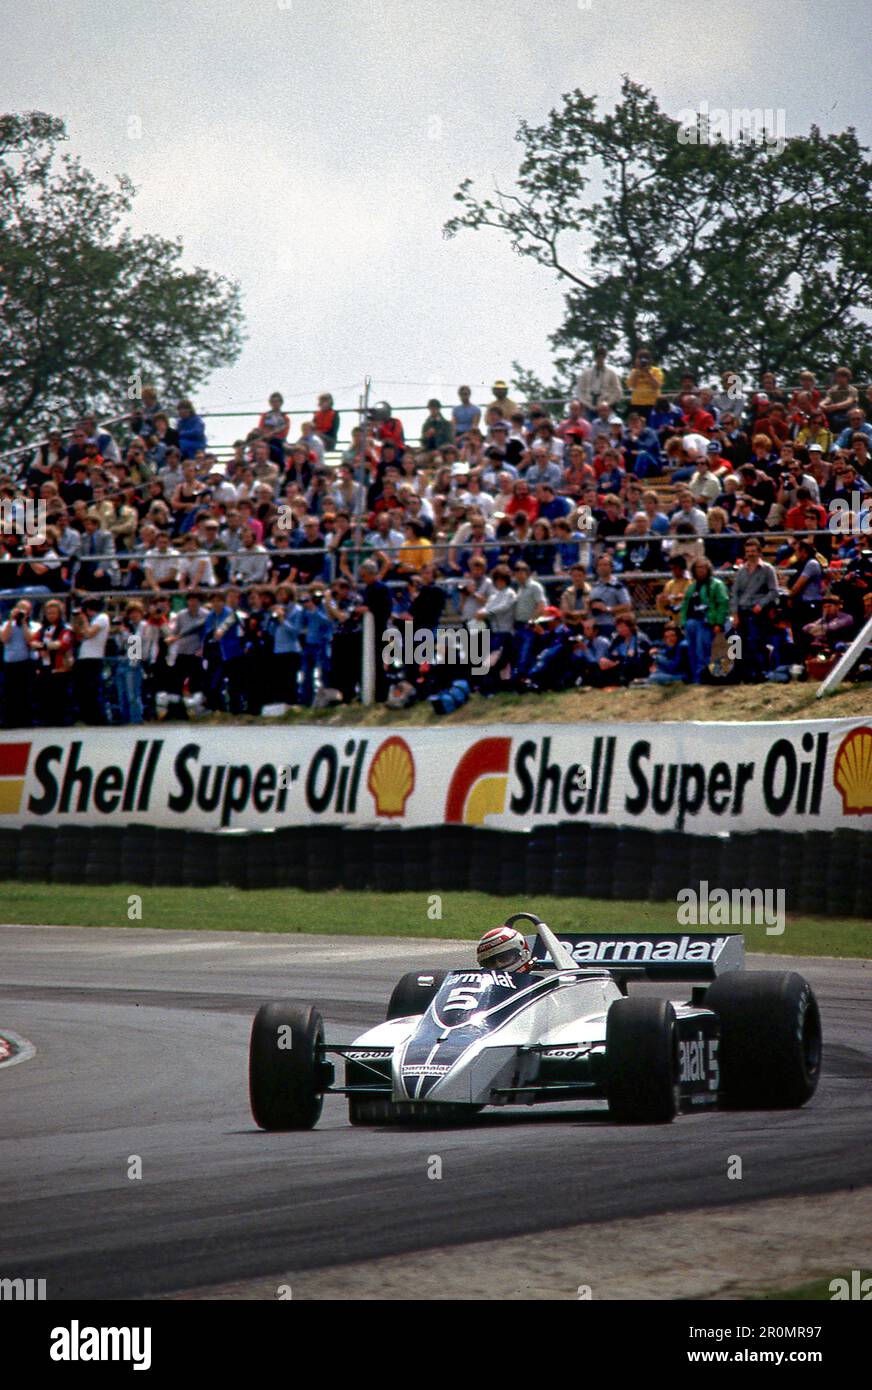 Nelson Piquet - Brabham bt49 FORD - 1980 British GP - Brands Hatch, England  Stock Photo - Alamy